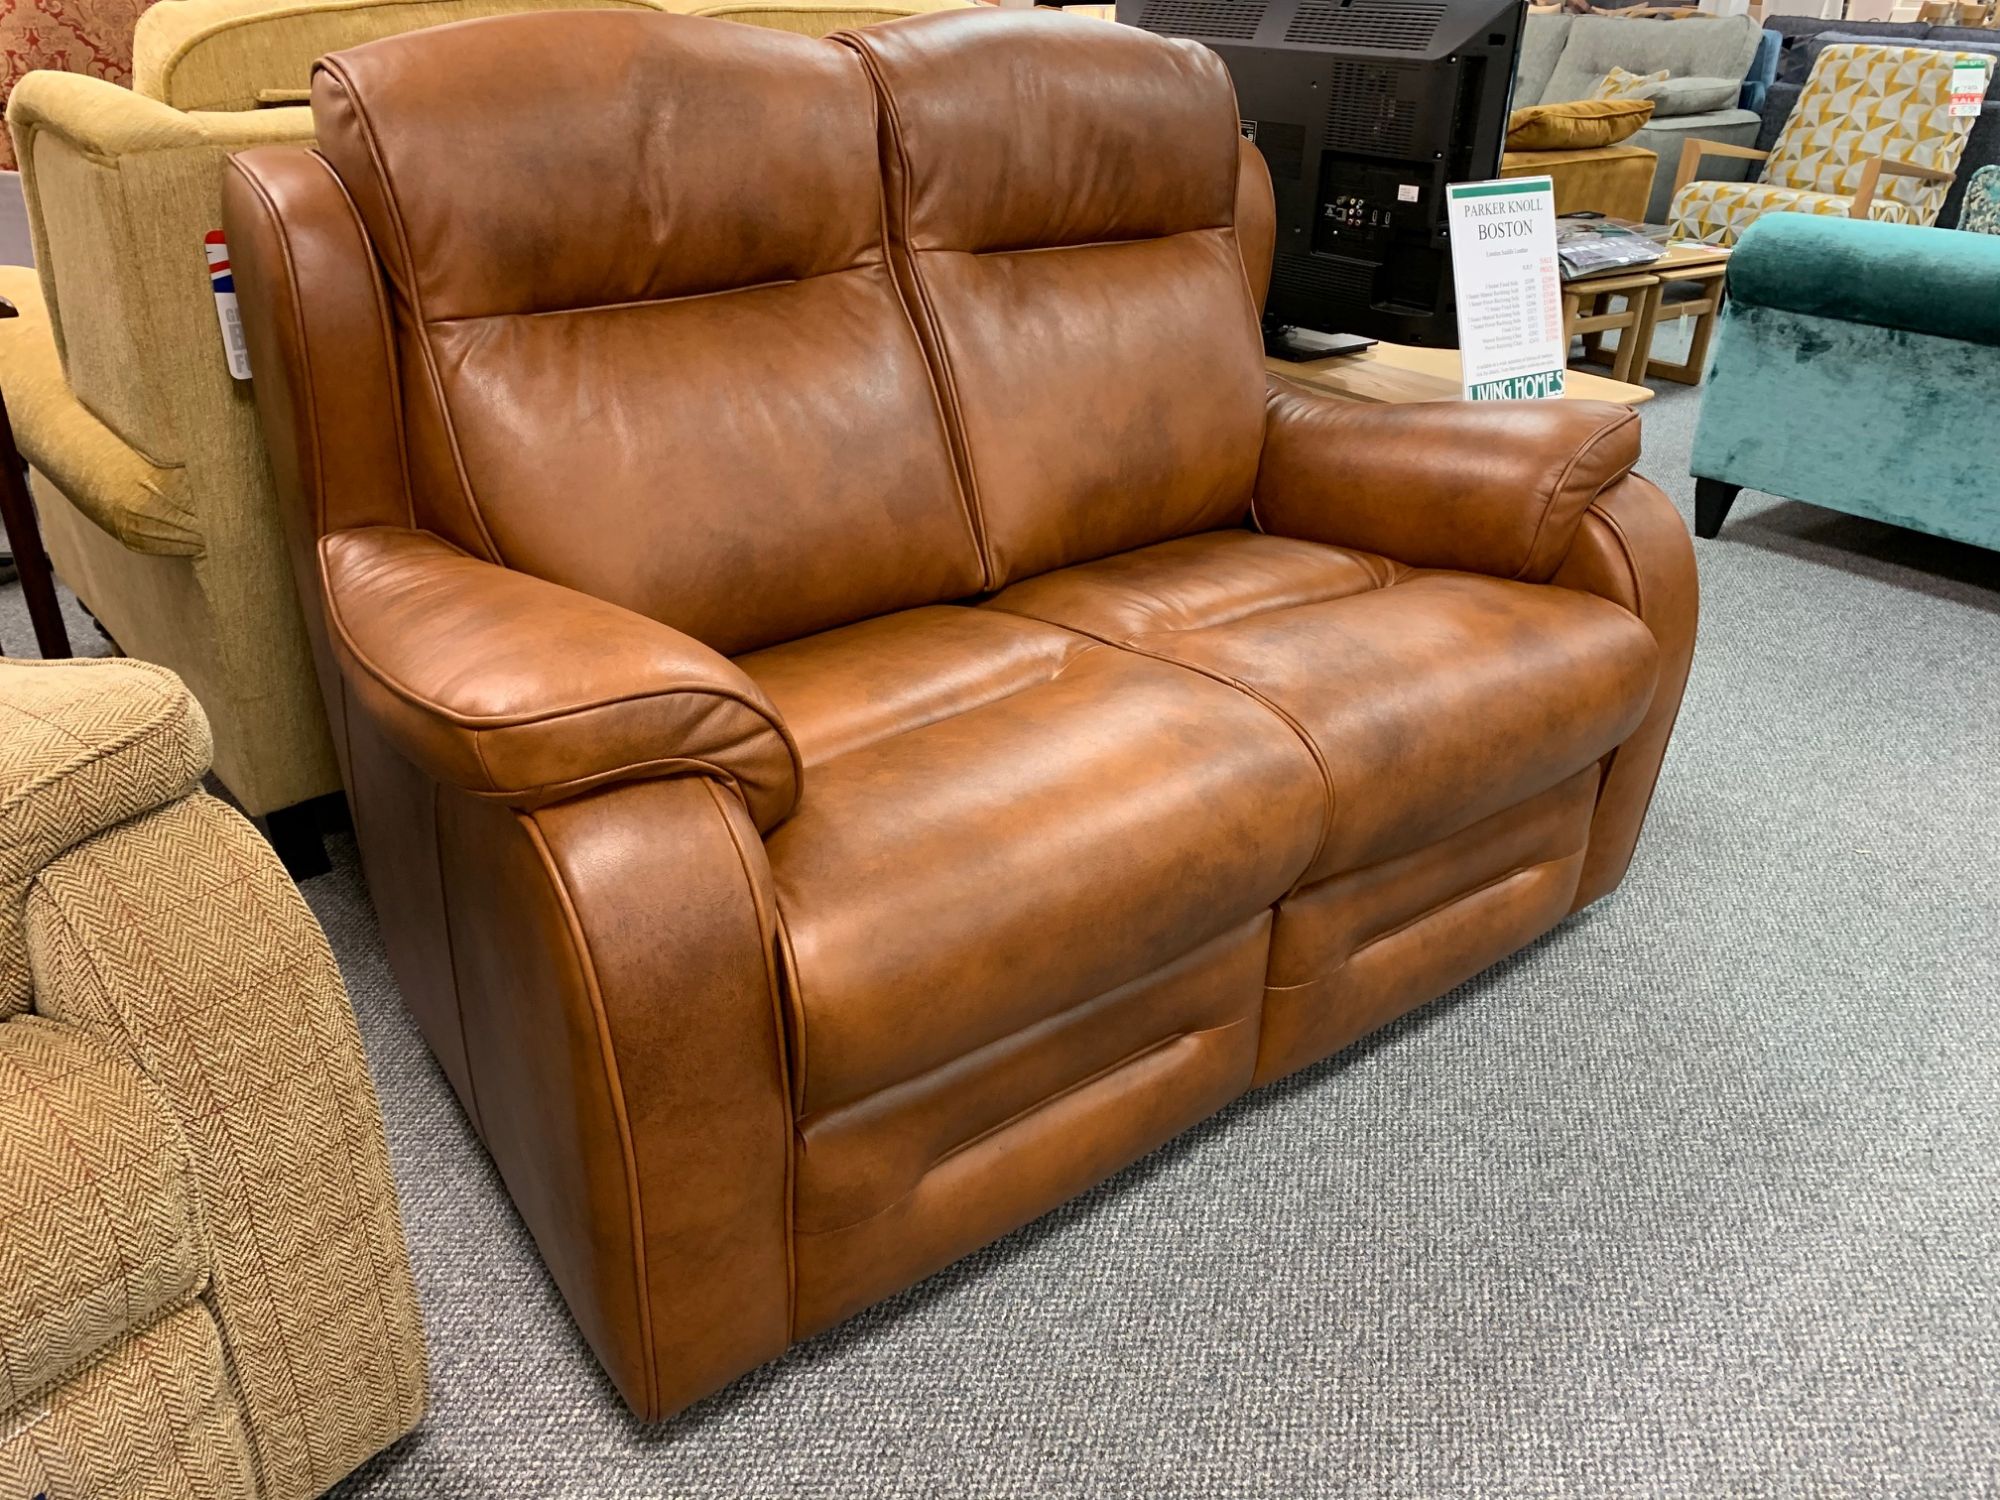 leather refinisher cuttable sofa johnson county iowa